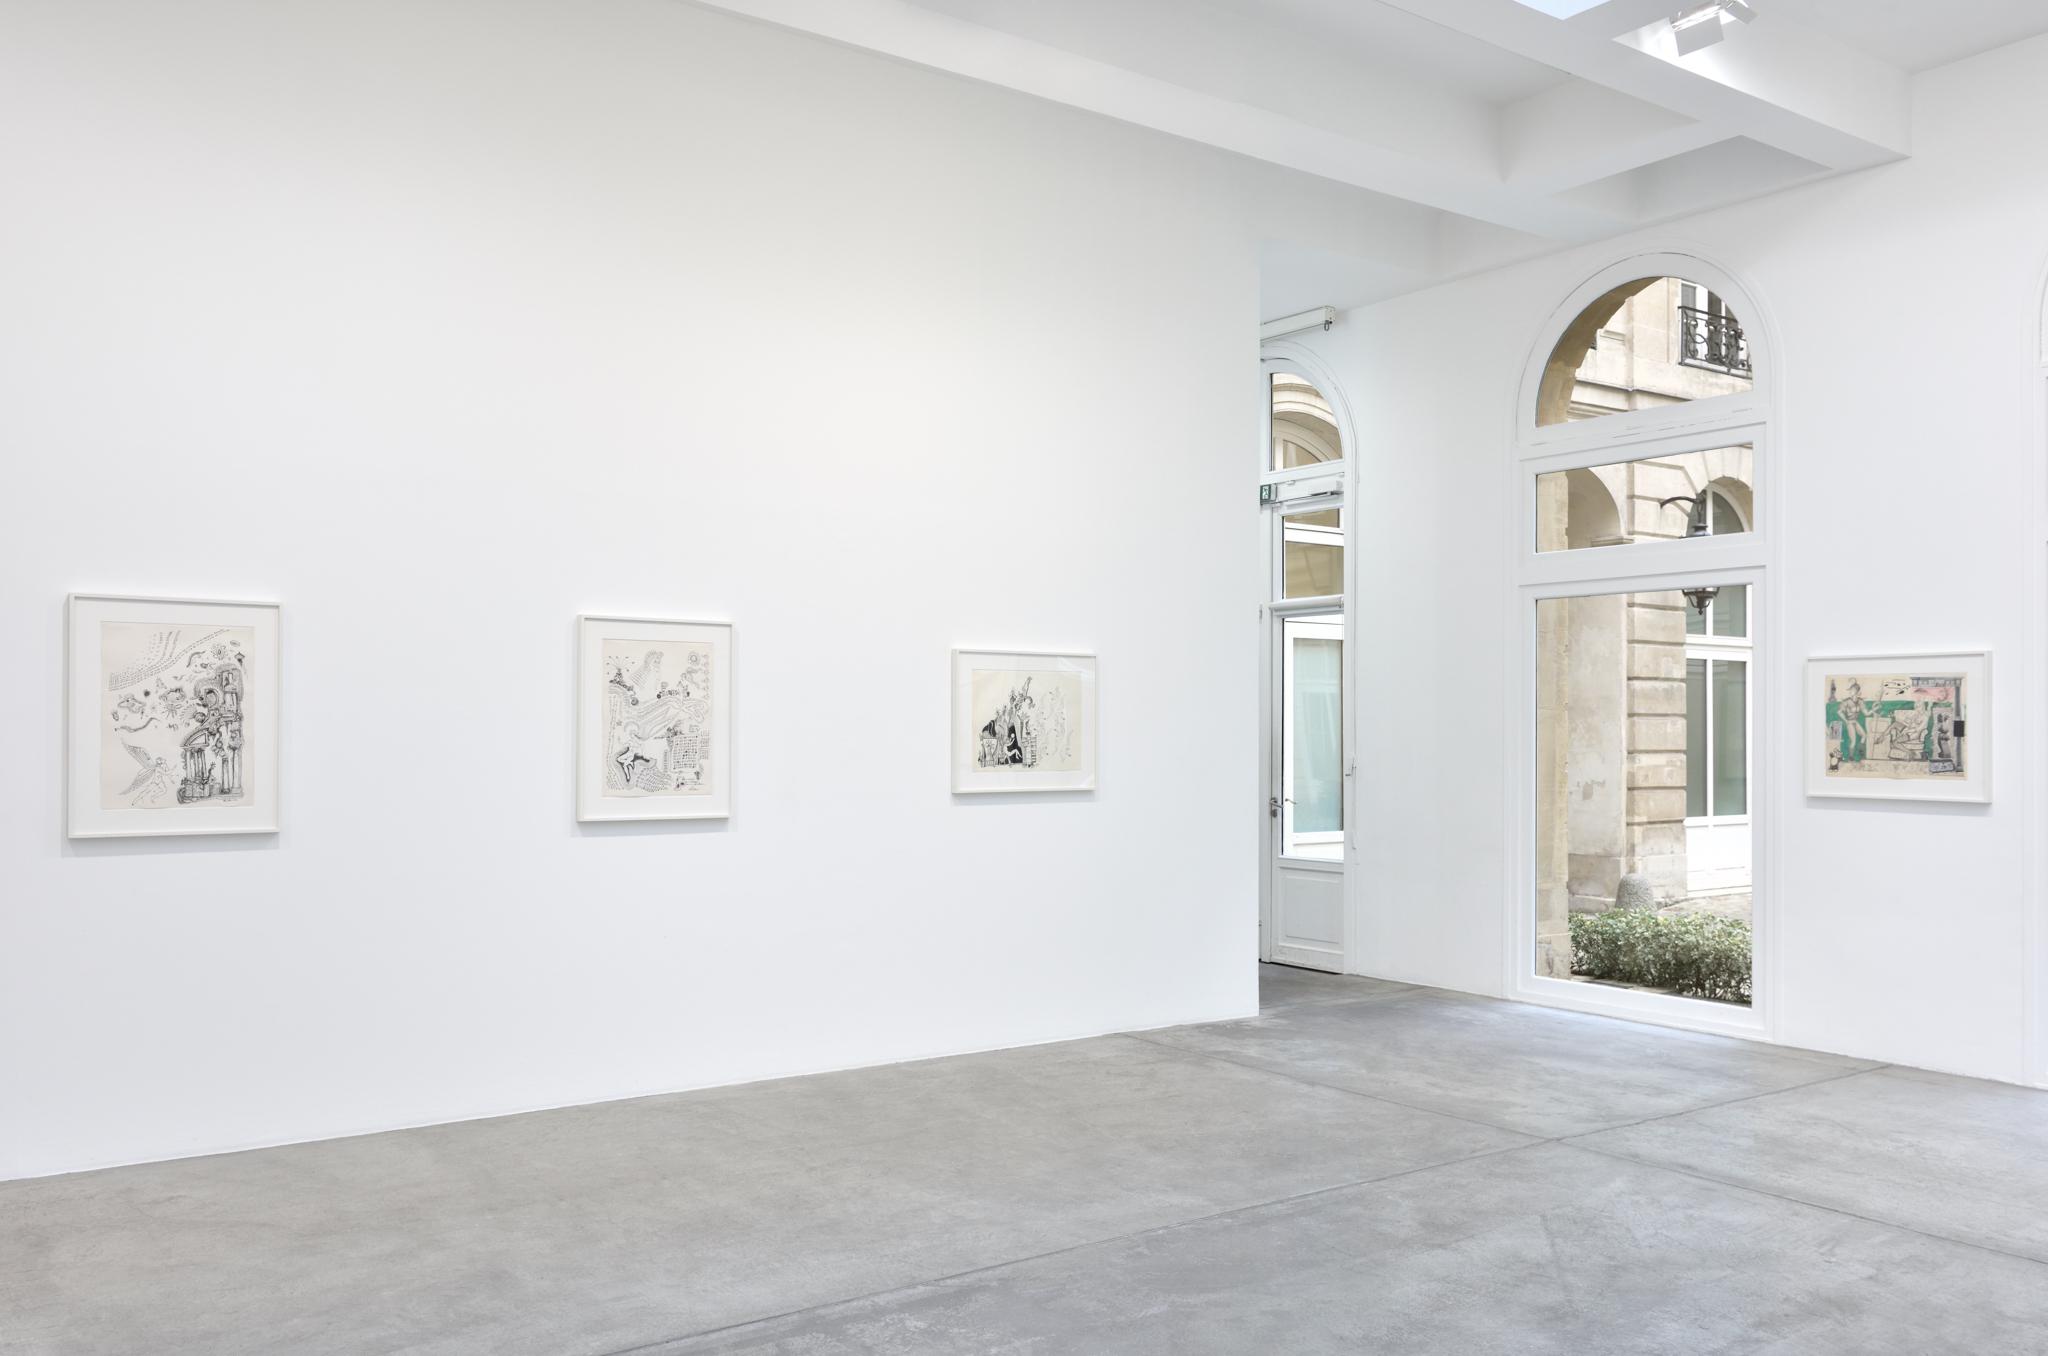 Installation view of the exhibition Robert Smithson Mundus Subeterraneus on view in Paris